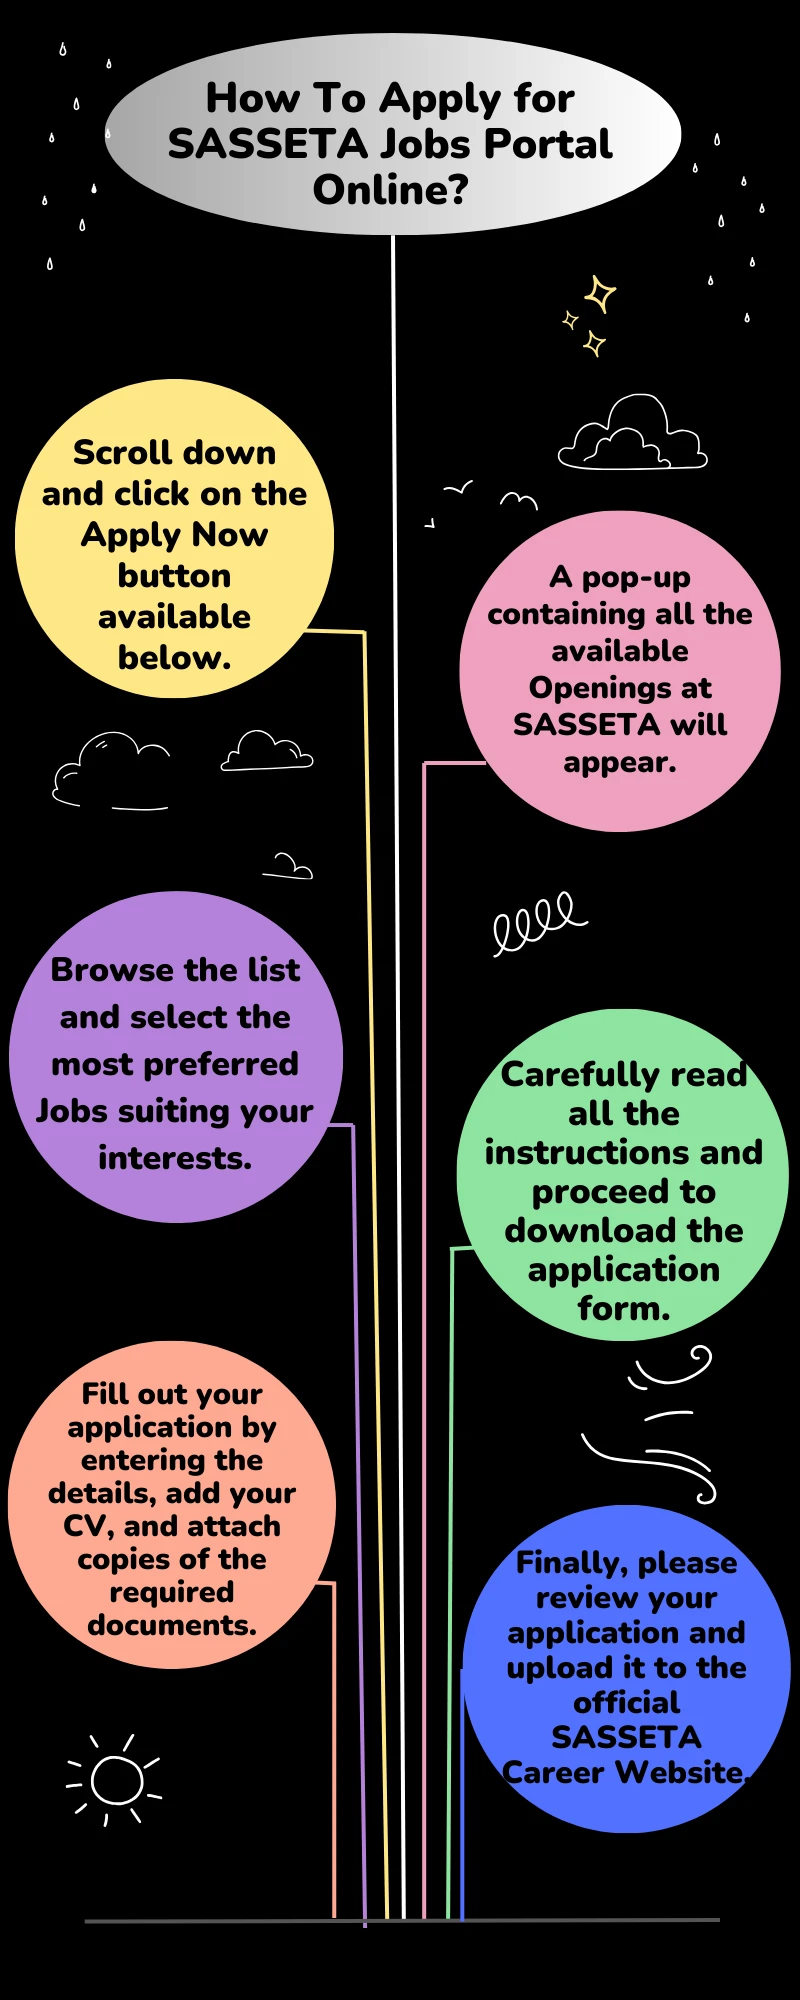 How To Apply for SASSETA Jobs Portal Online?